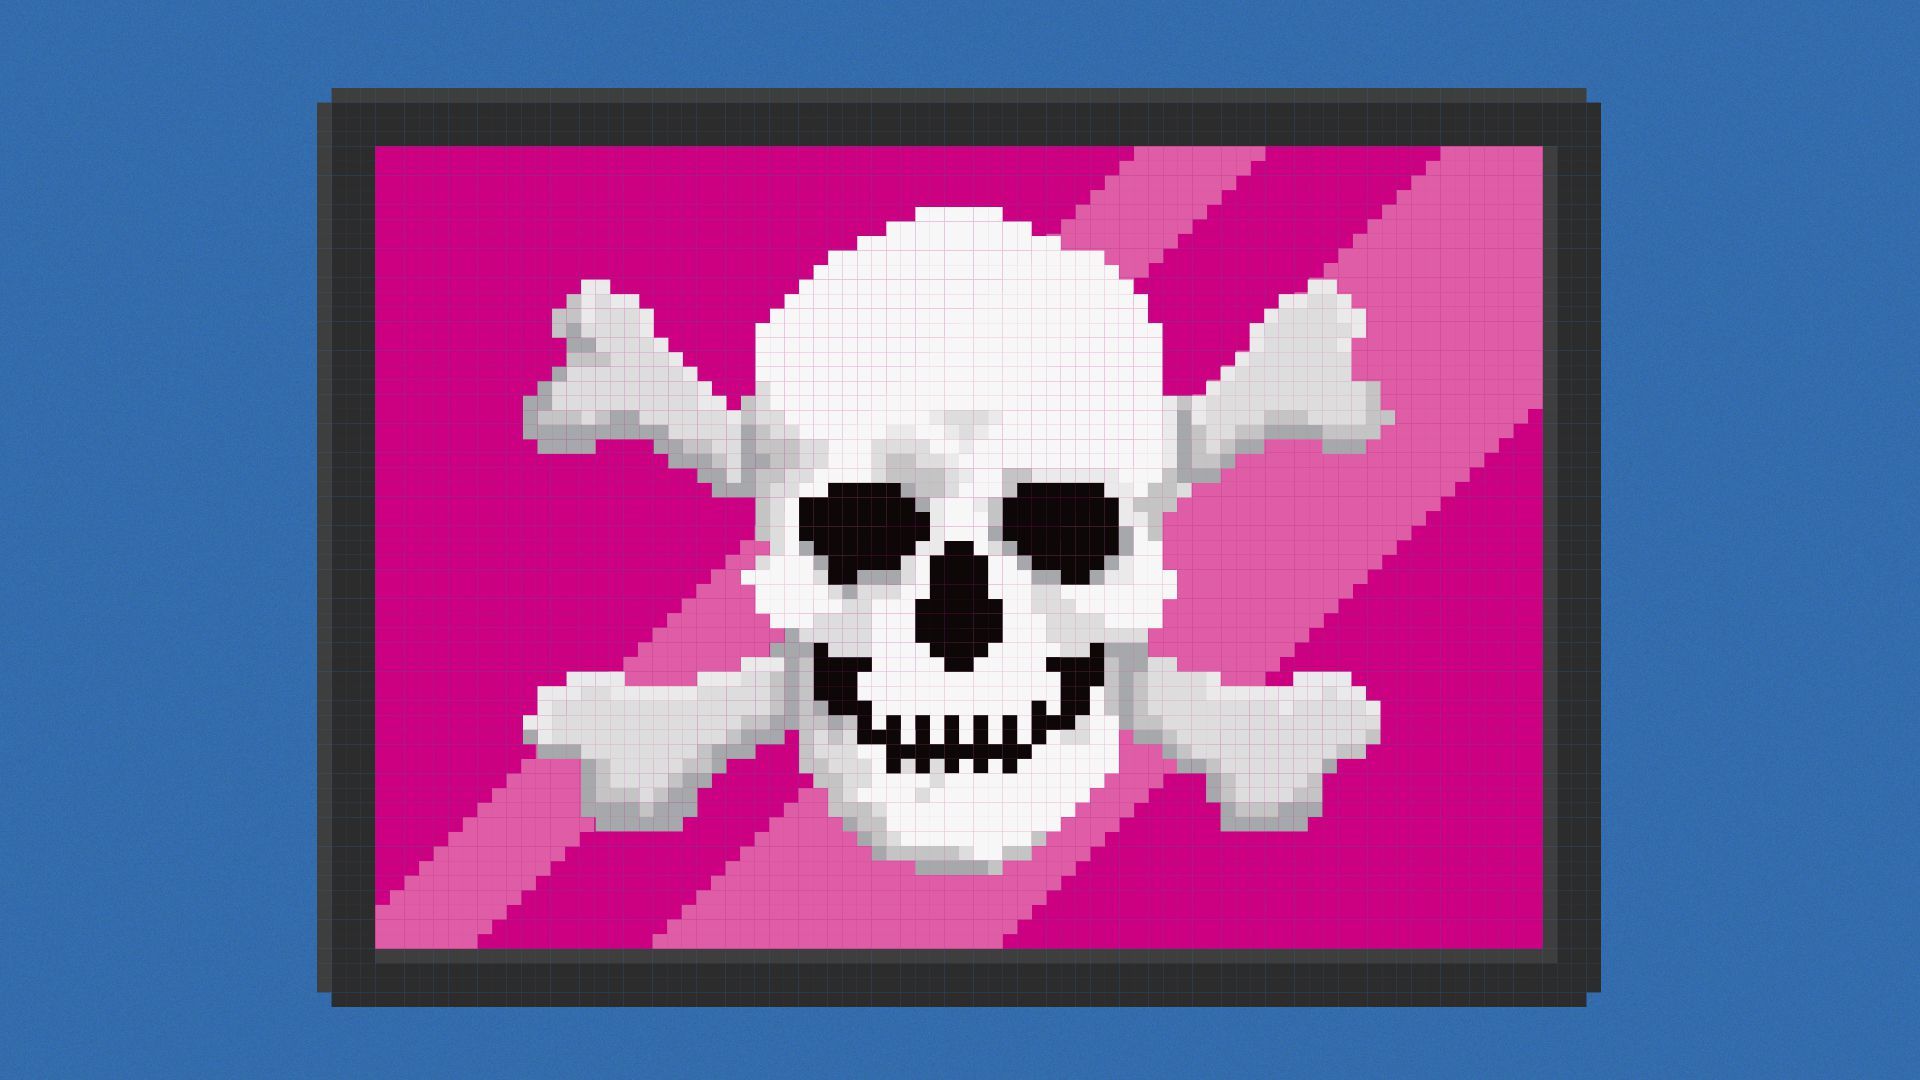 Illustration of an 8-bit skull and crossbones on a digital screen.